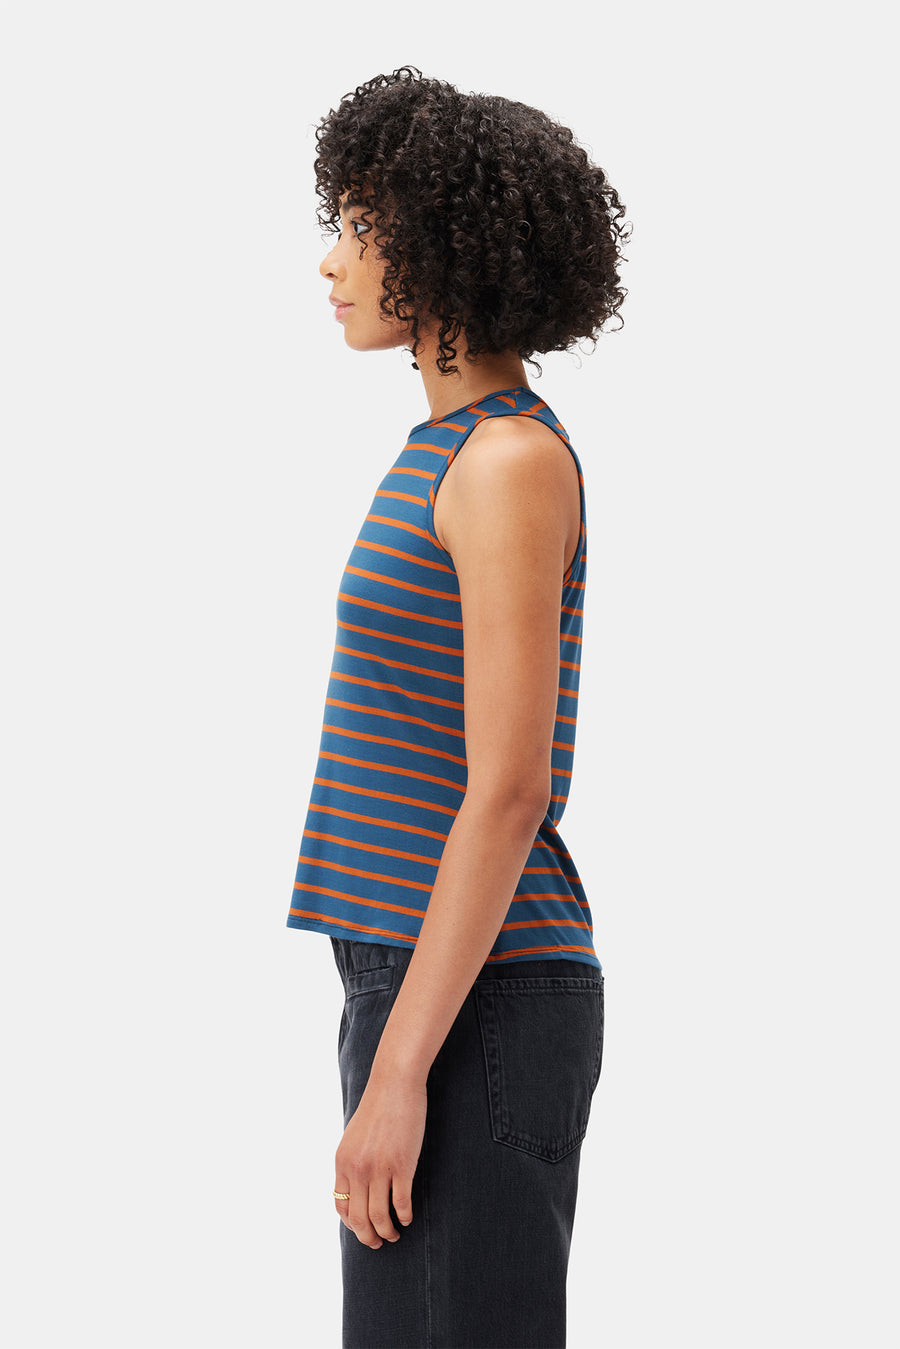 Jillian Dream Knit Tank - Azure Umber Stripe